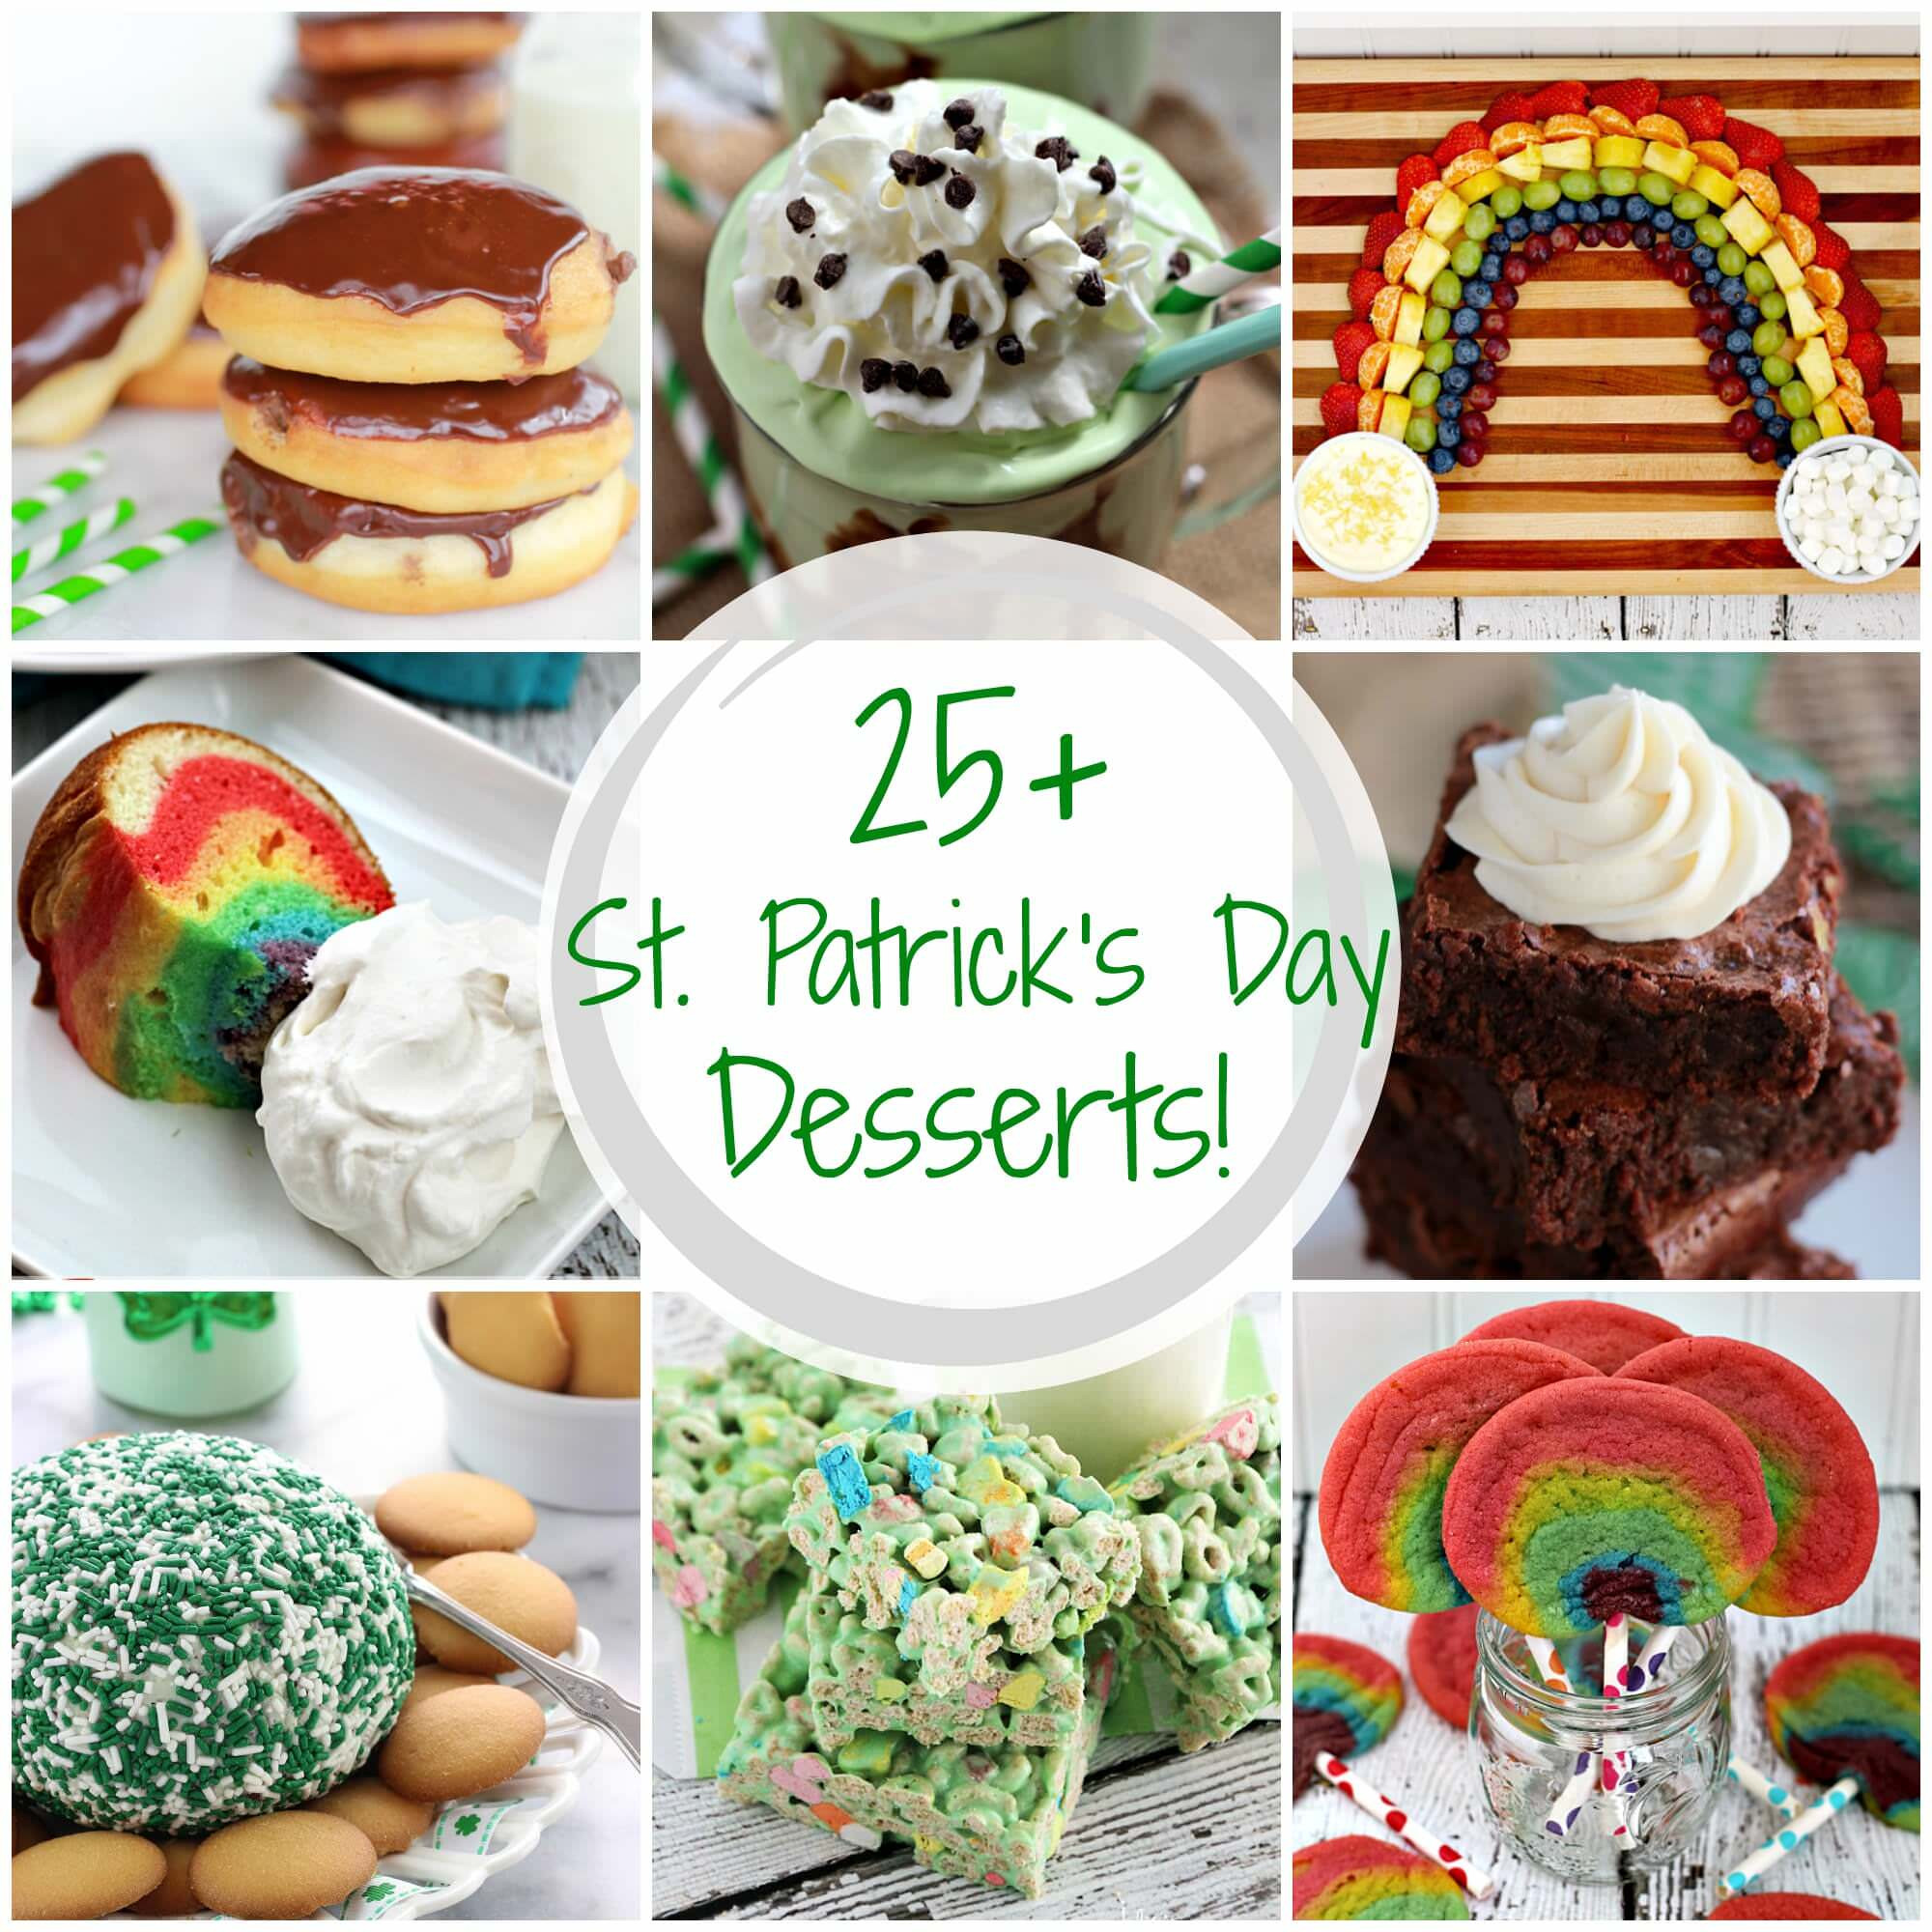 Green Desserts For St Patrick'S Day
 25 St Patrick’s Day Desserts Julie s Eats & Treats